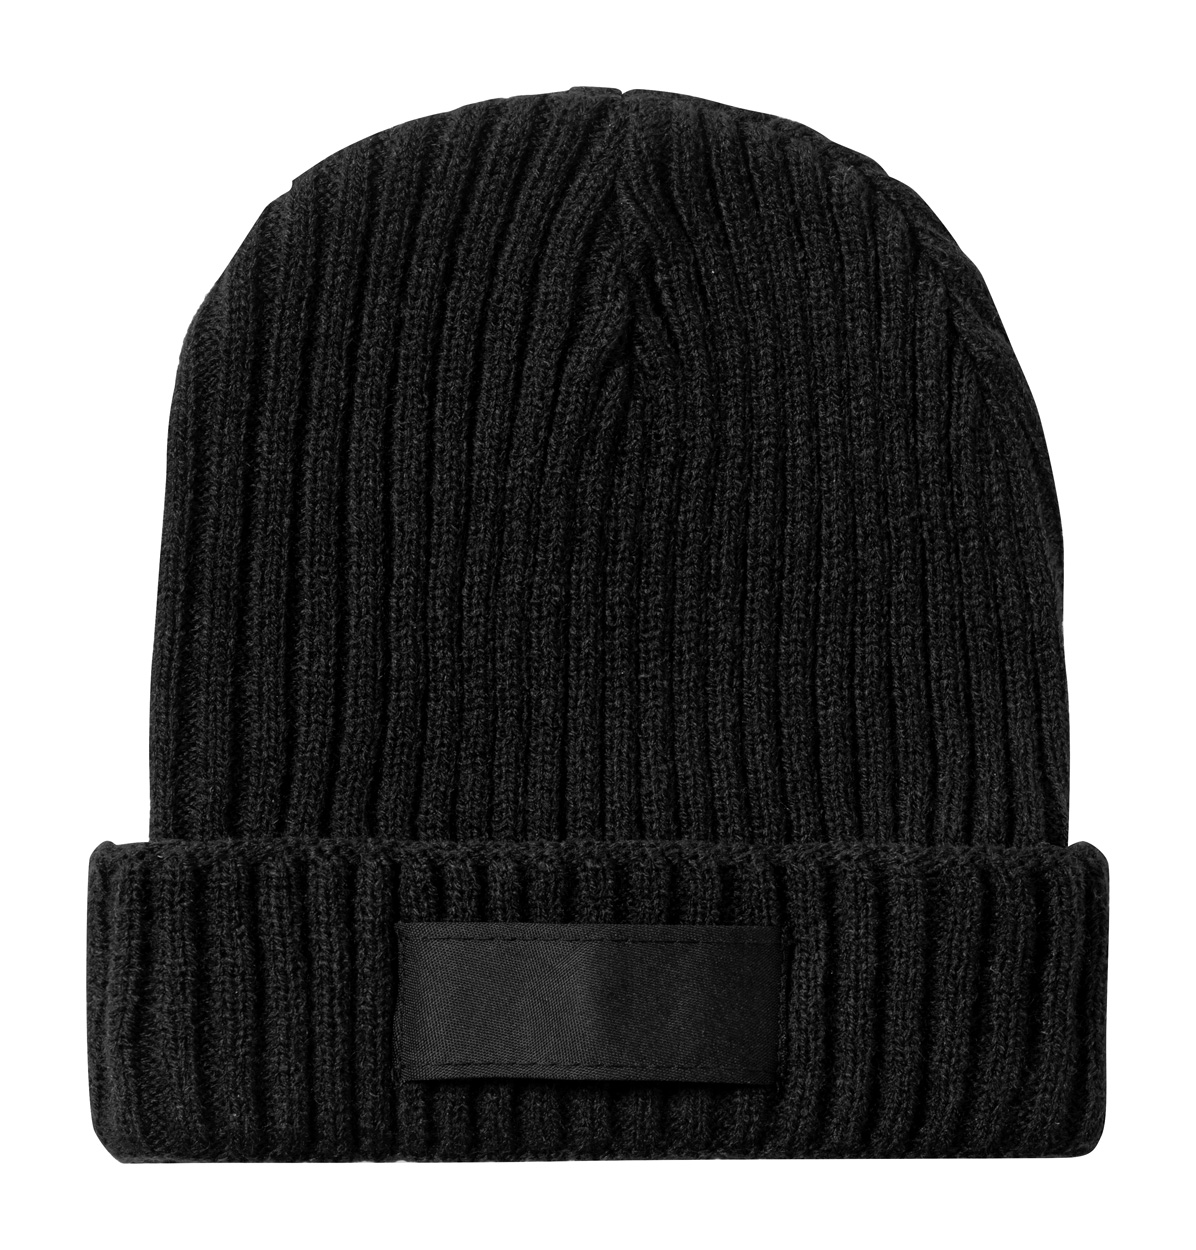 Selsoker winter cap - black